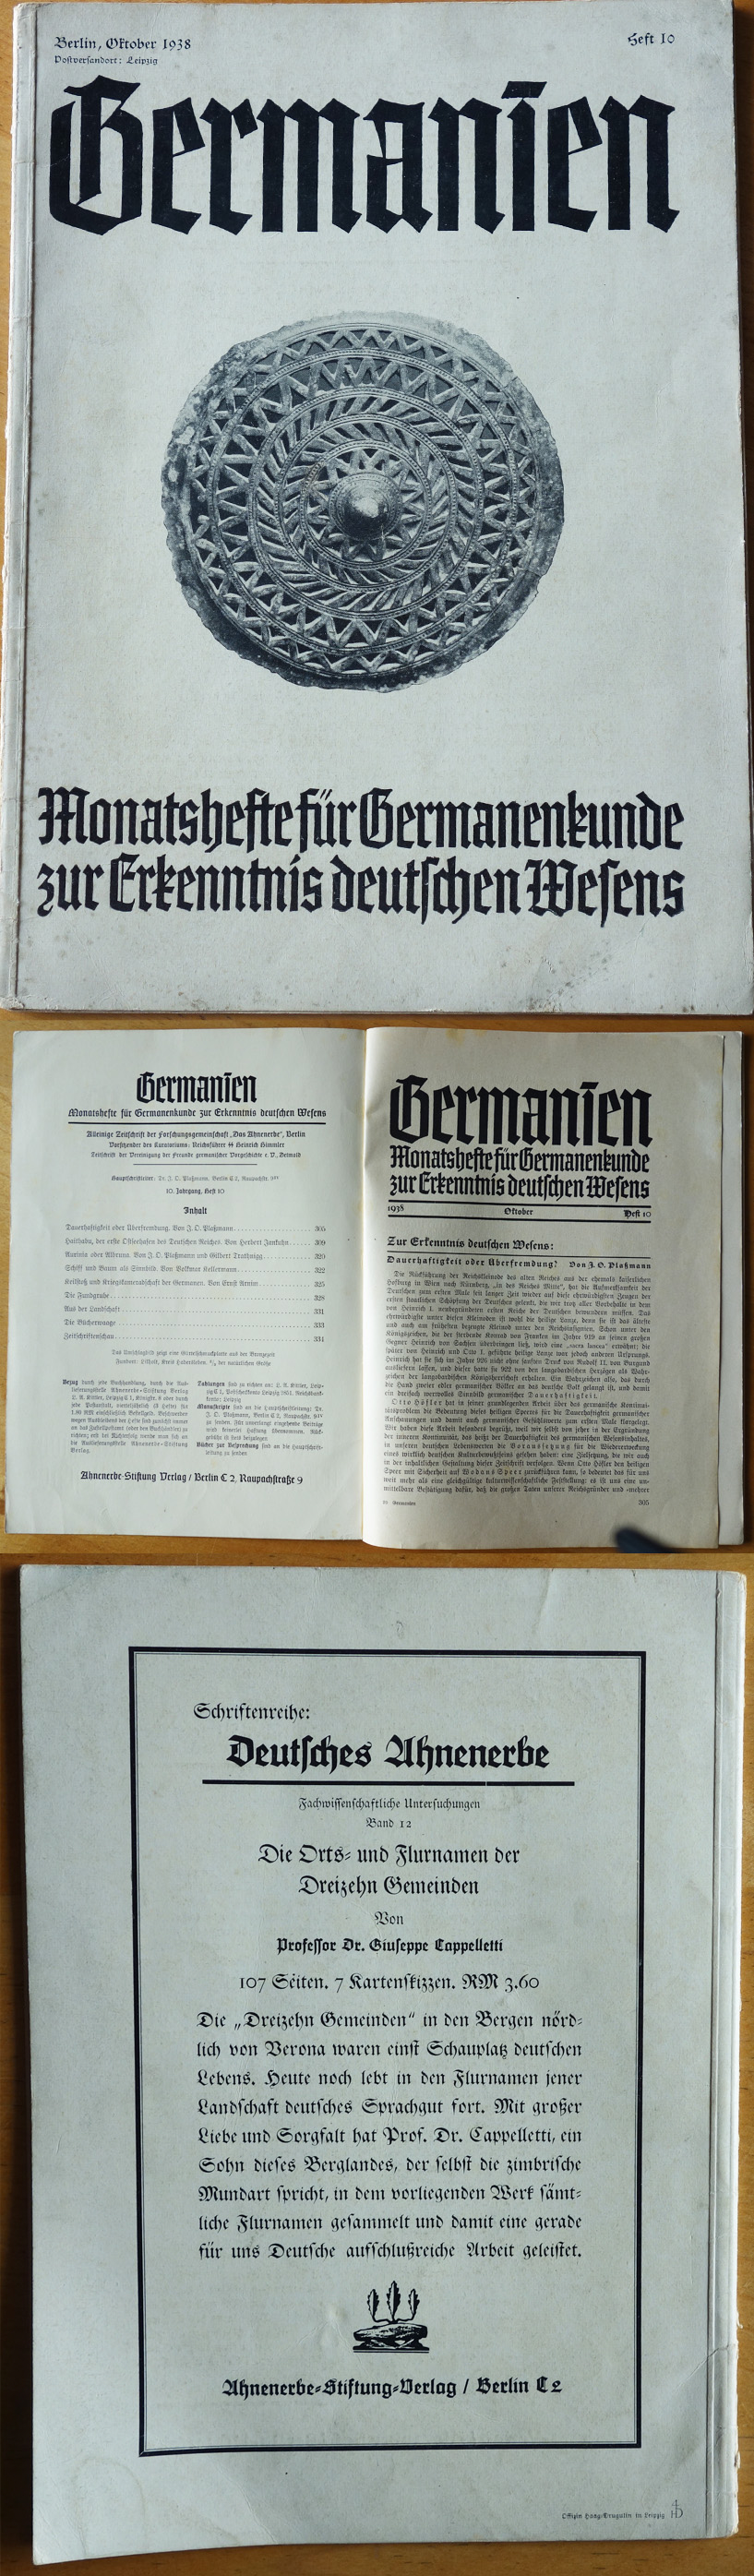 Germanien, October 1938, Issue 10